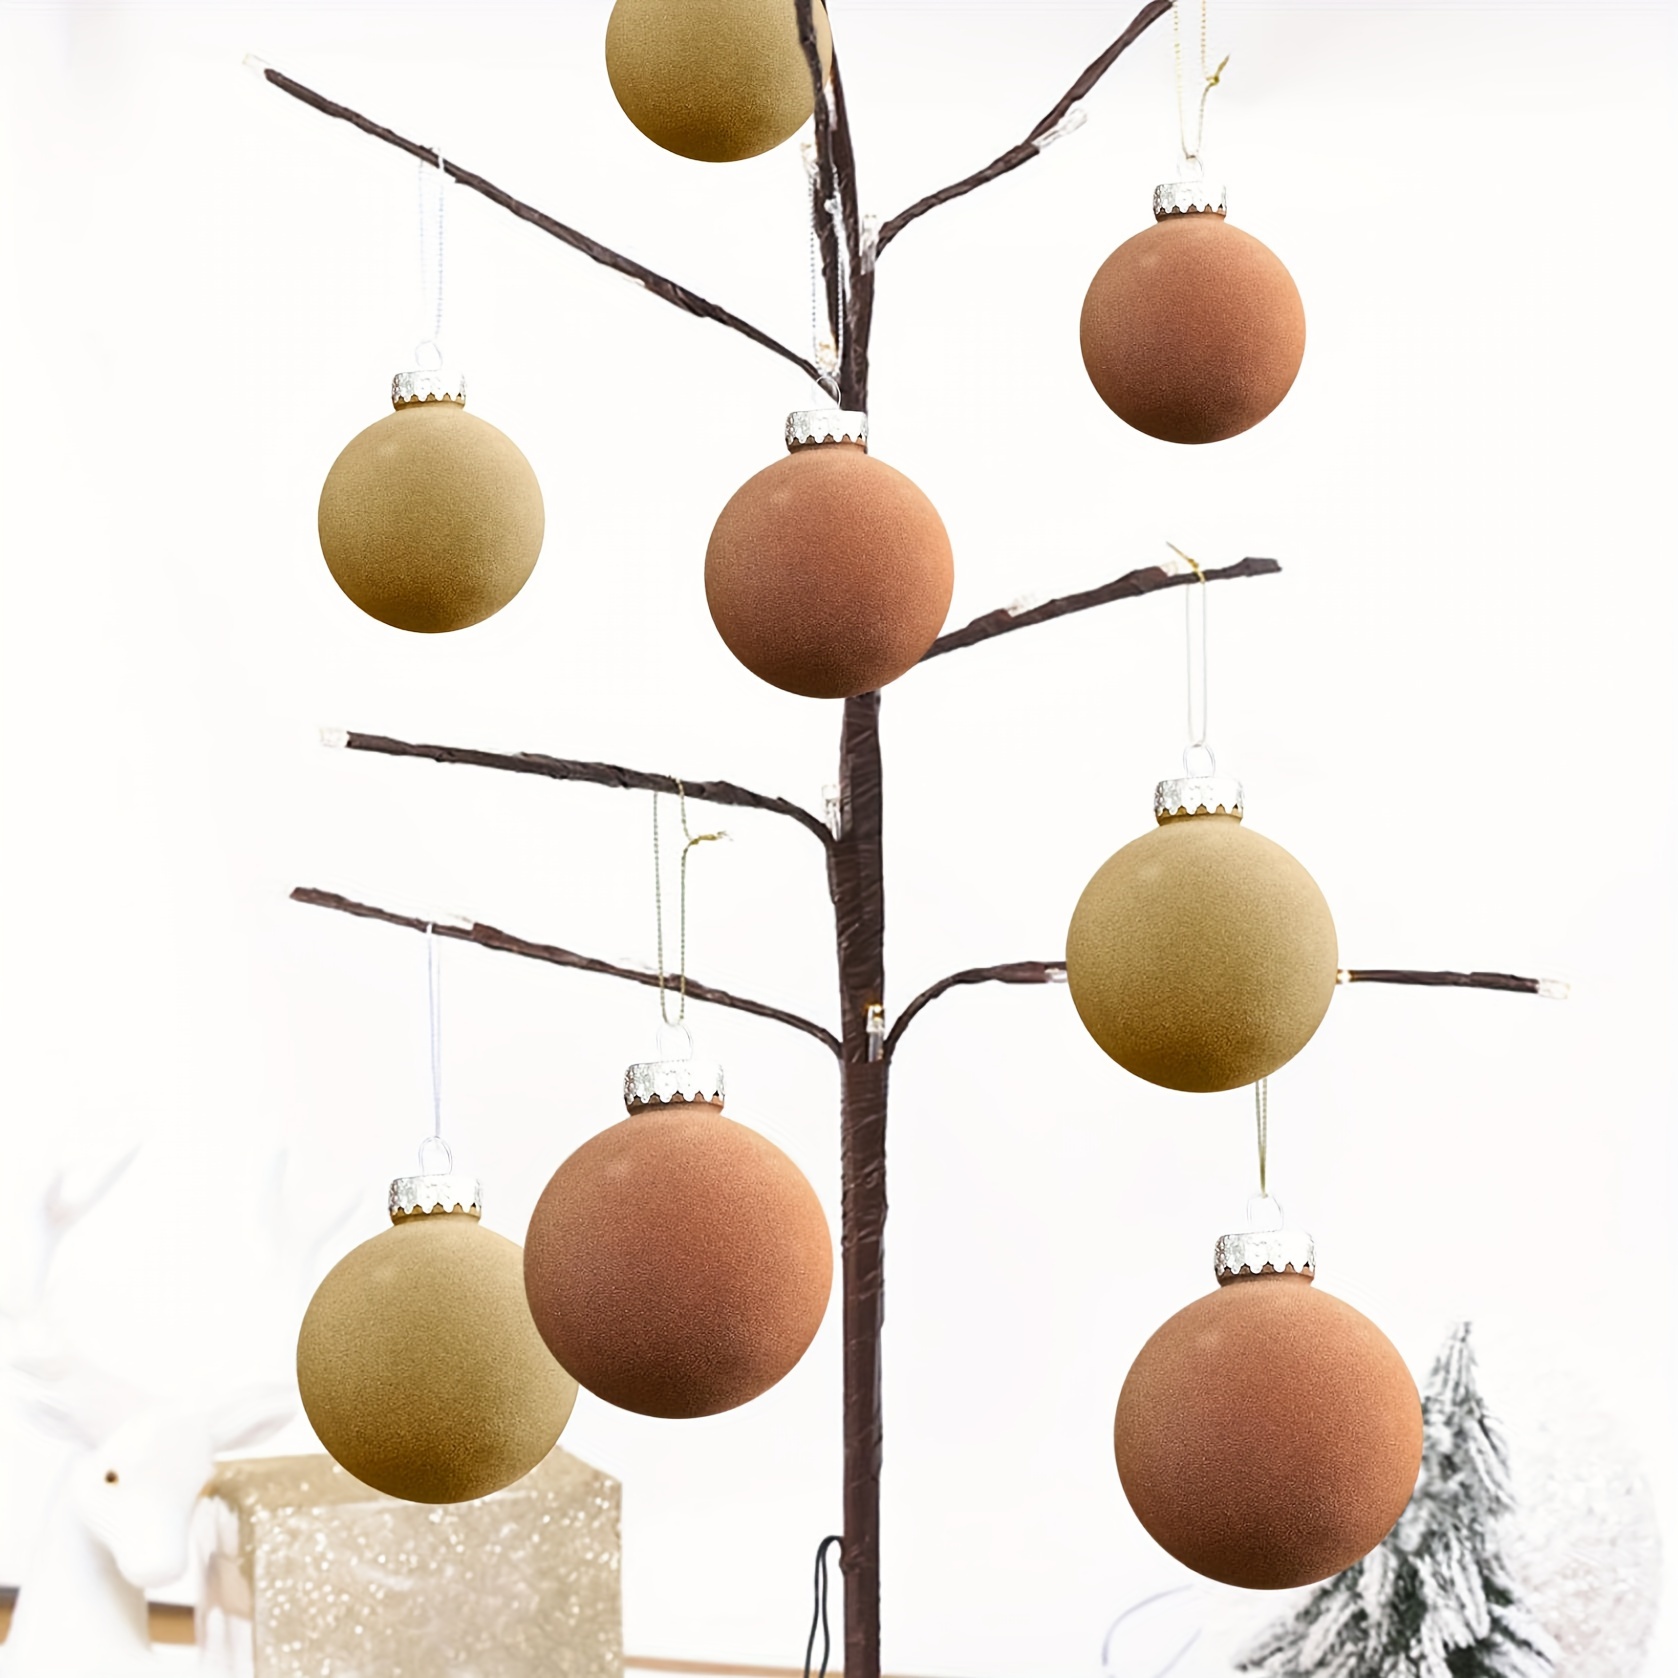  Velvet Christmas Balls,Christmas Tree Flocked Hanging Ornament  Set of 12,2.4 Christmas Baubles Shatterproof,Plastic Balls Decorative  Hanging Ornaments for Holiday : Home & Kitchen